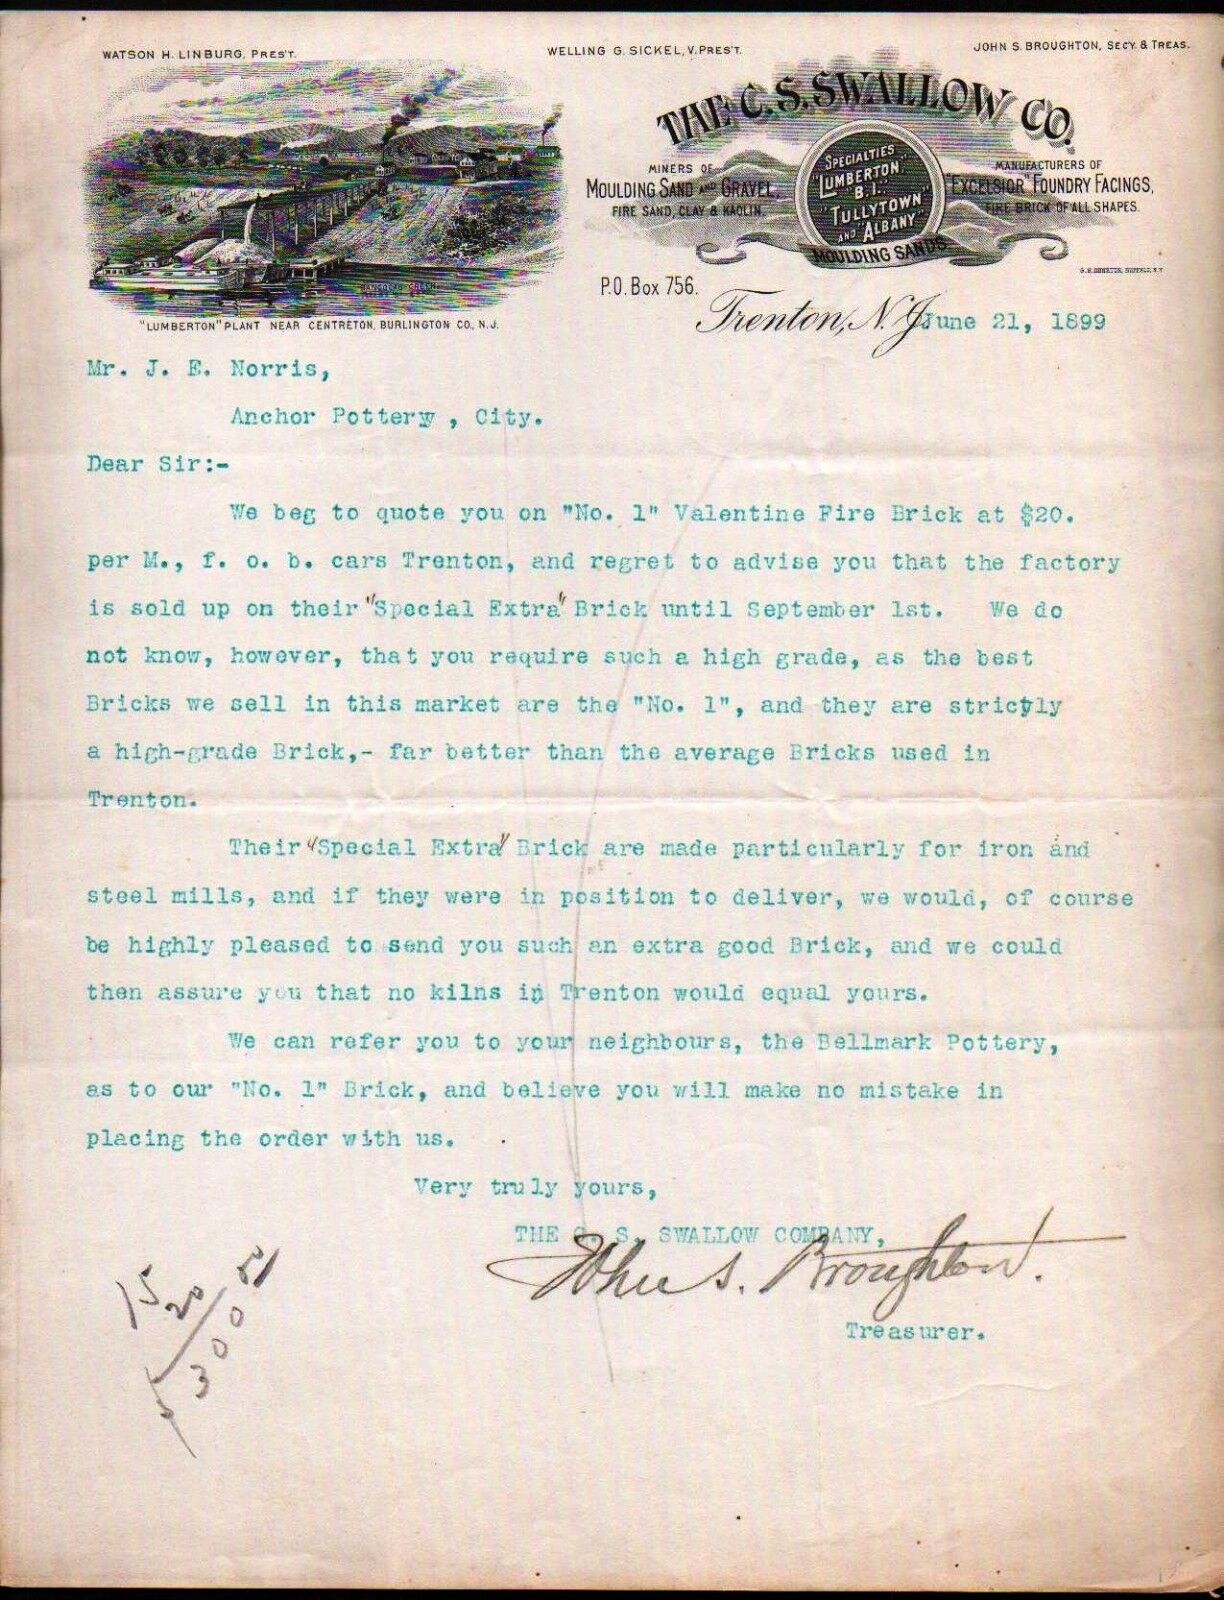 1899 C S Swallow Co - Moulding Sand Gravel Fire Brick Trenton - Letter Head Bill